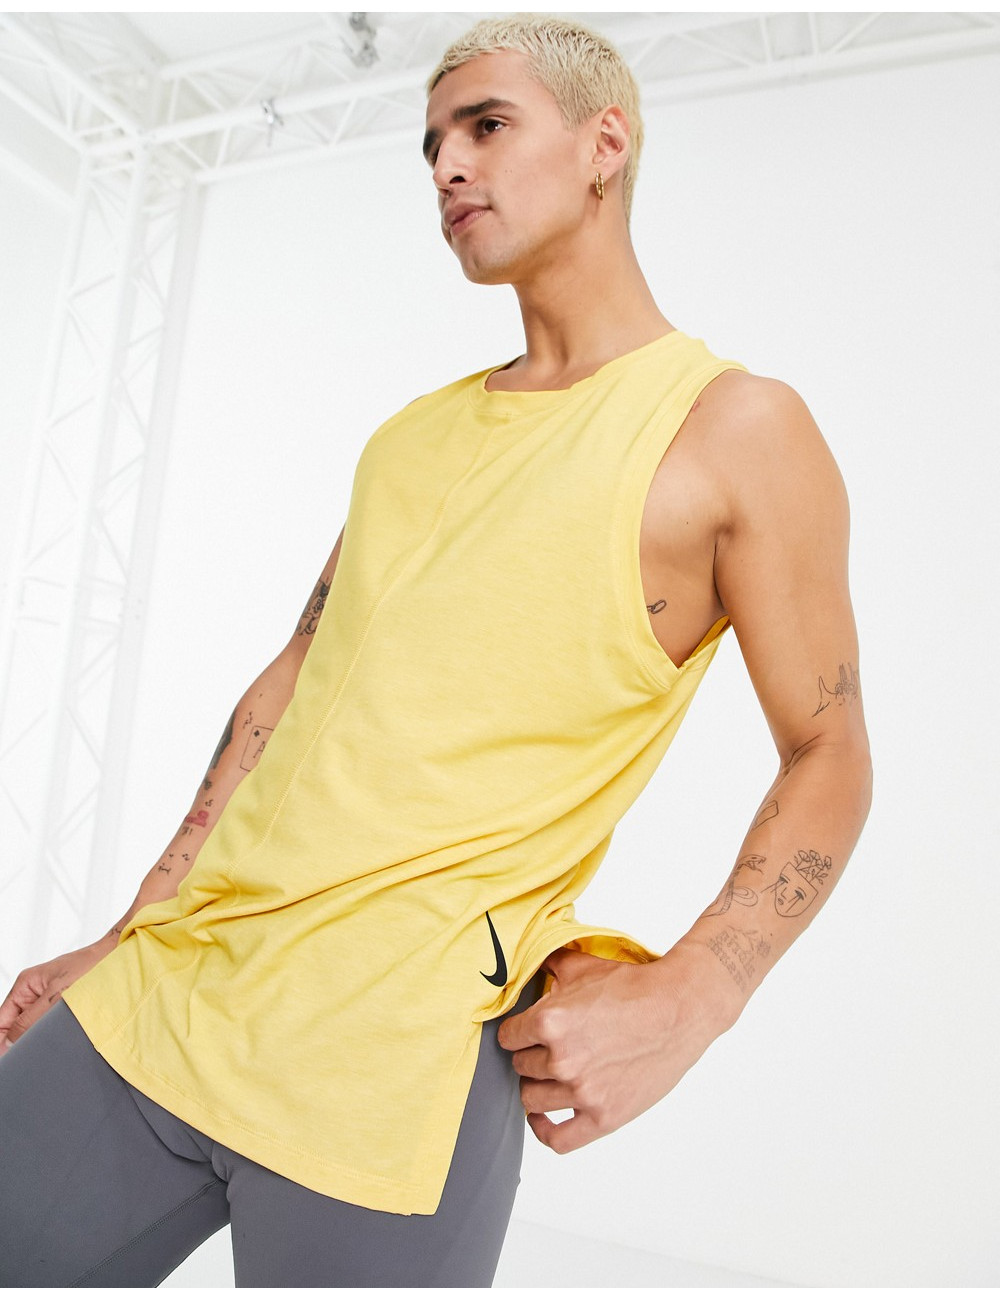 Nike Yoga Dri-FIT vest in...